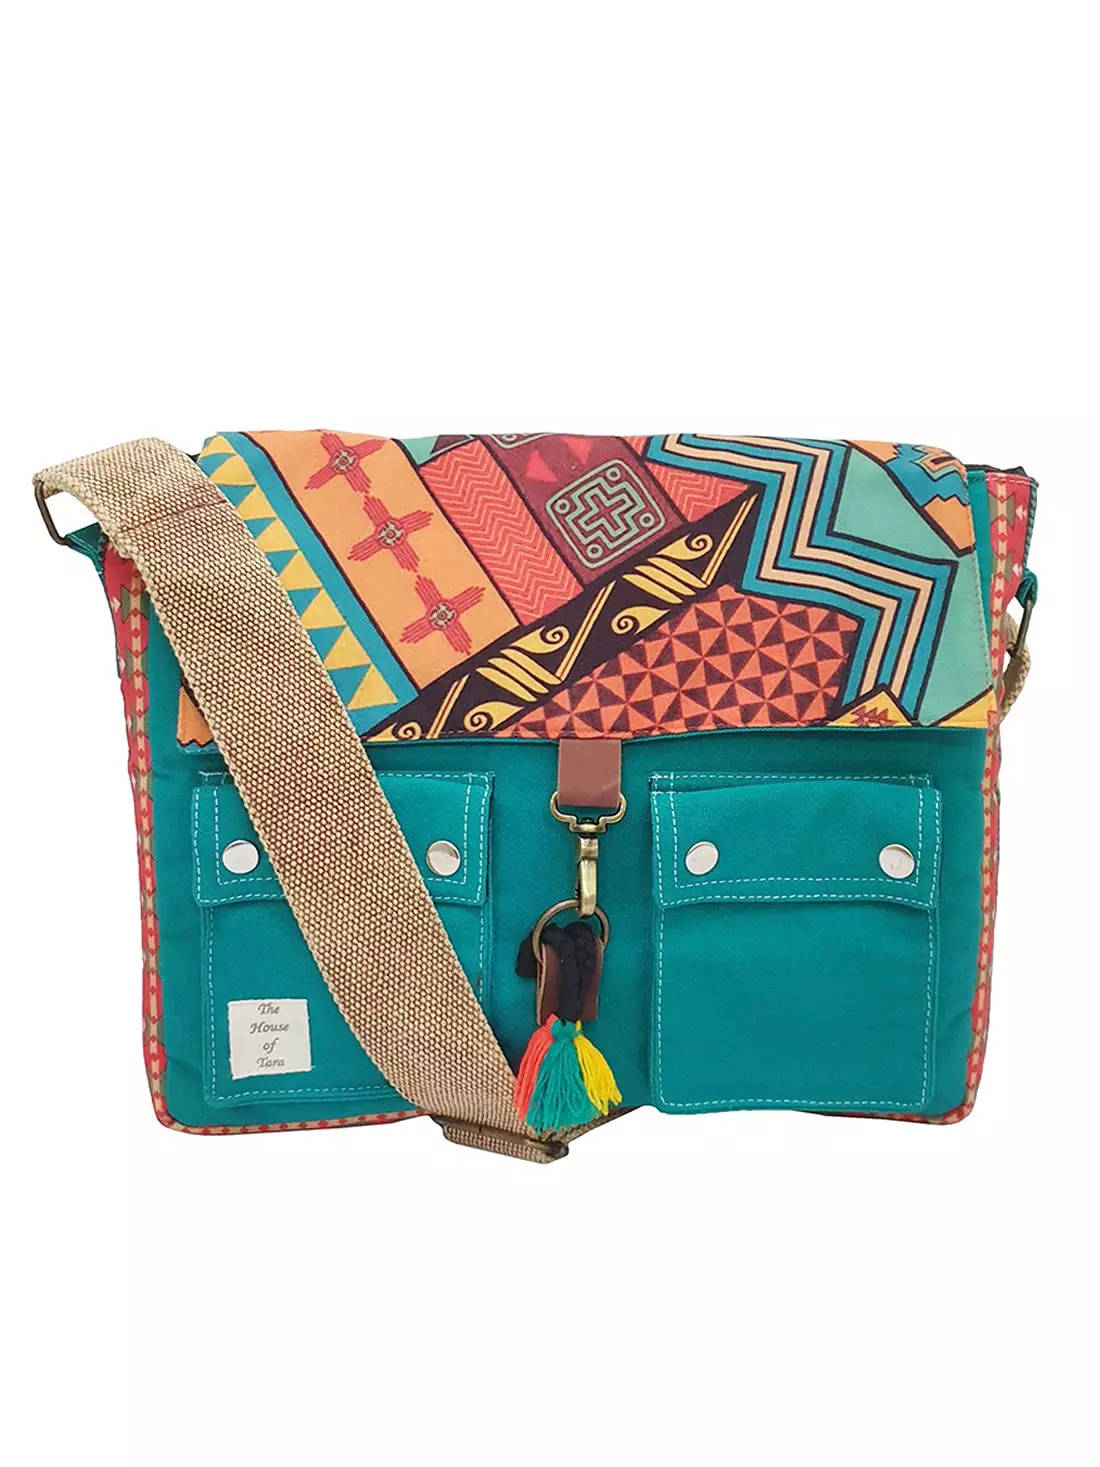 Handmade ladies purse embroidery Indian Design sling bag crossbody bohemian  look | eBay